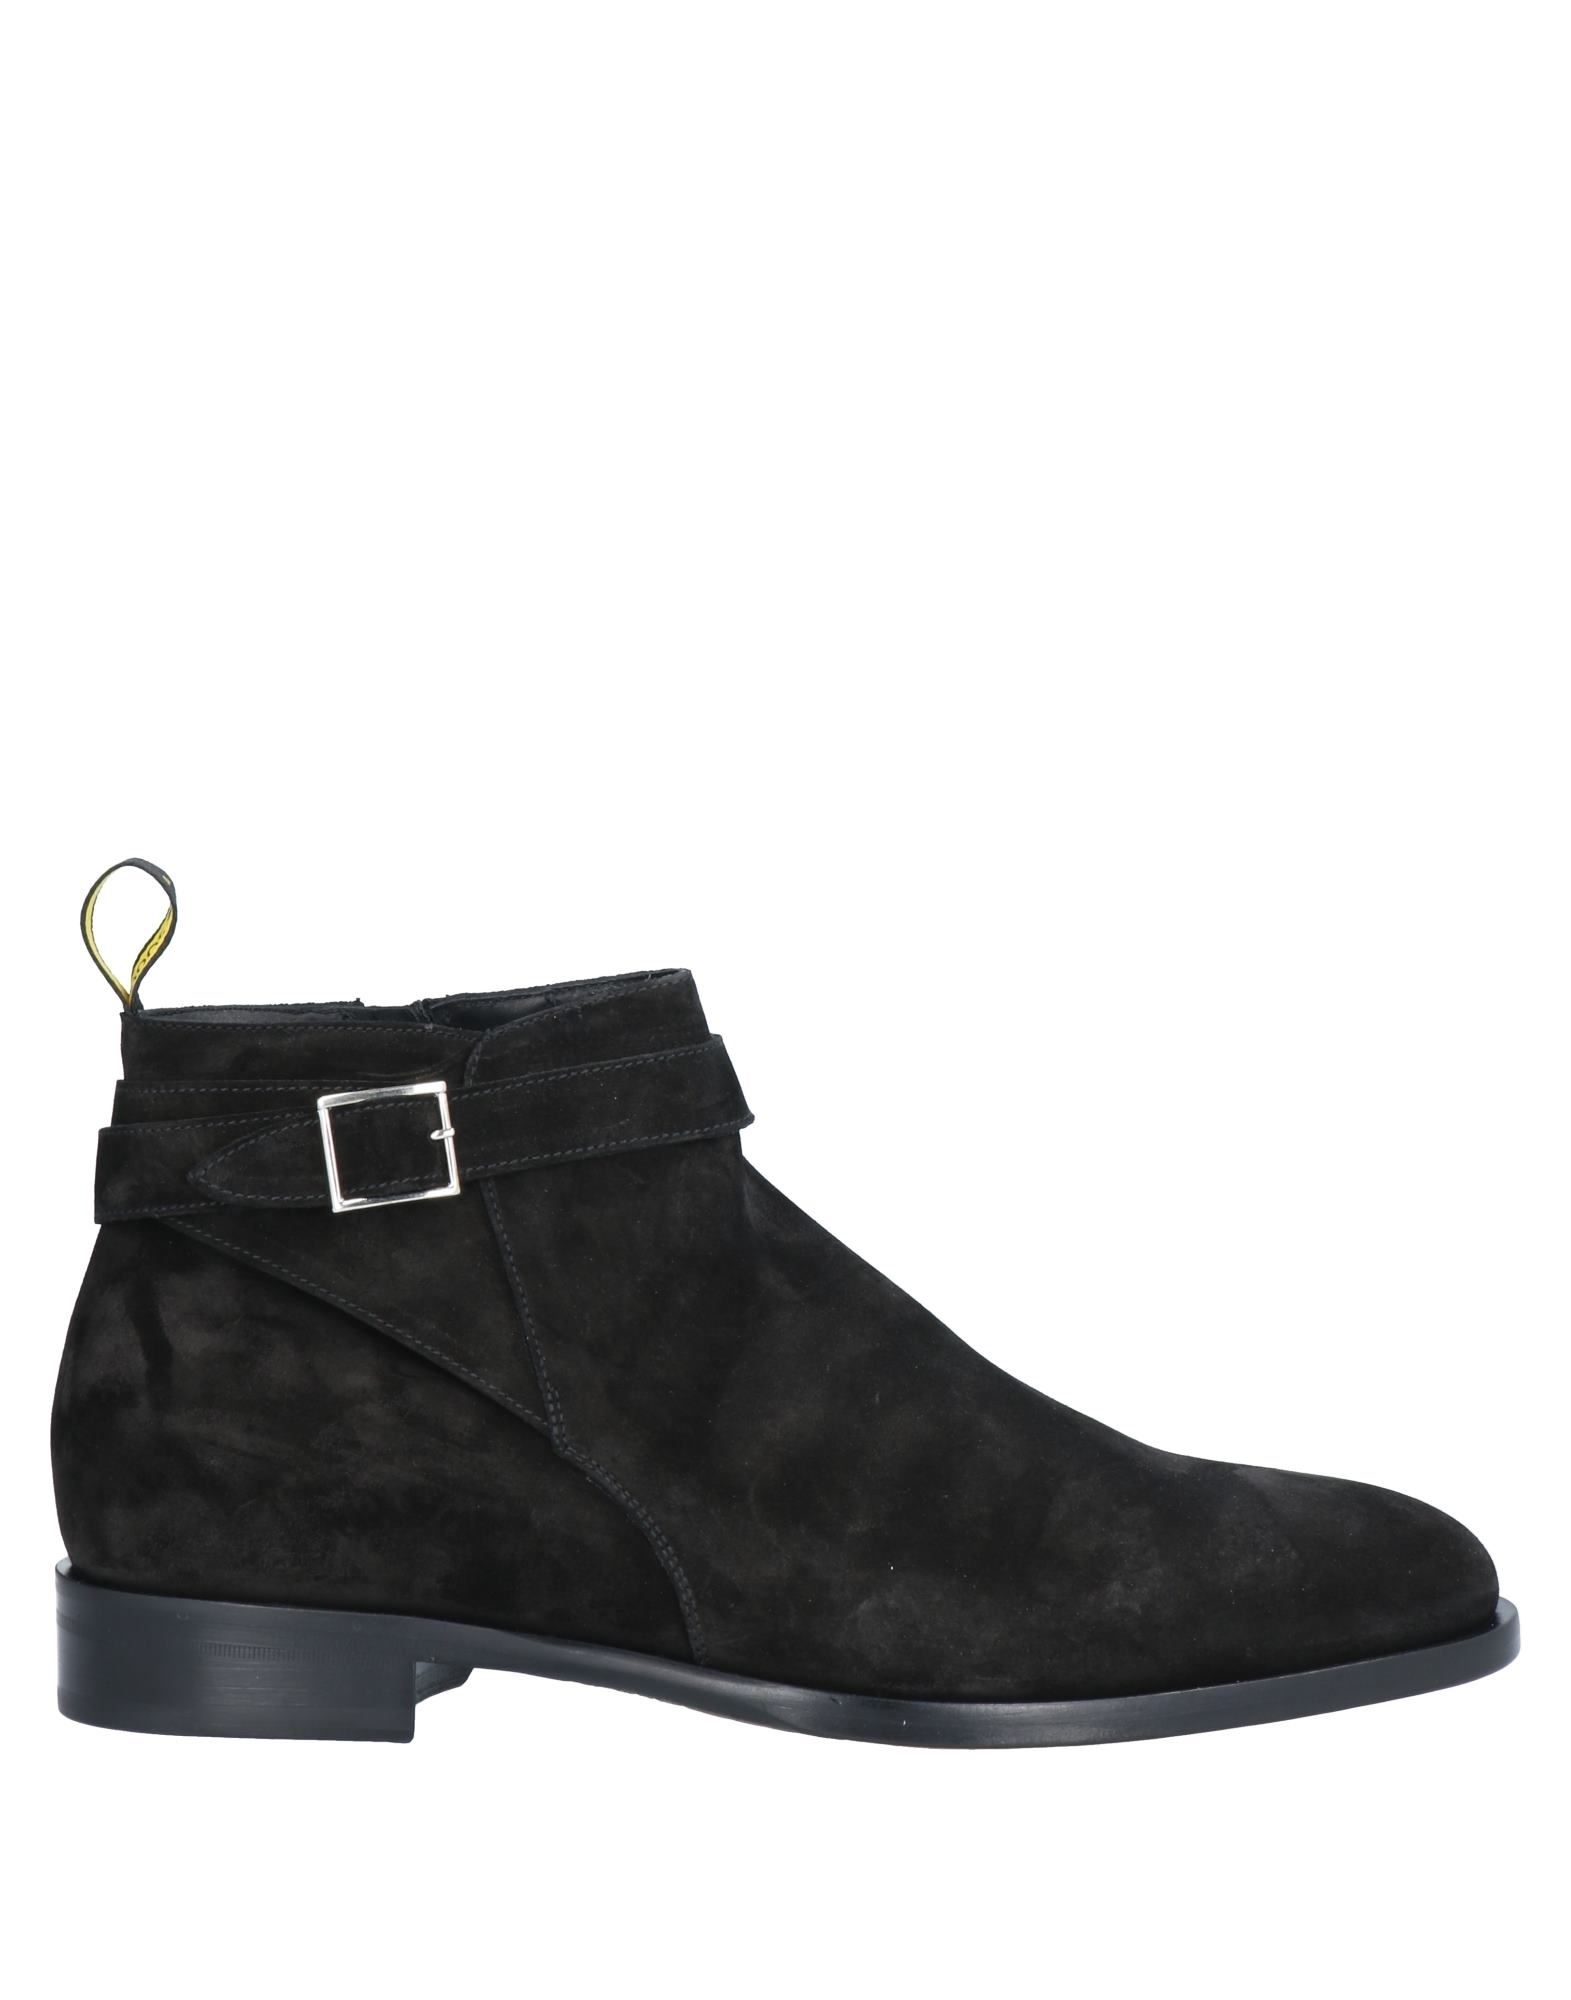 Shop Doucal's Man Ankle Boots Black Size 9 Soft Leather